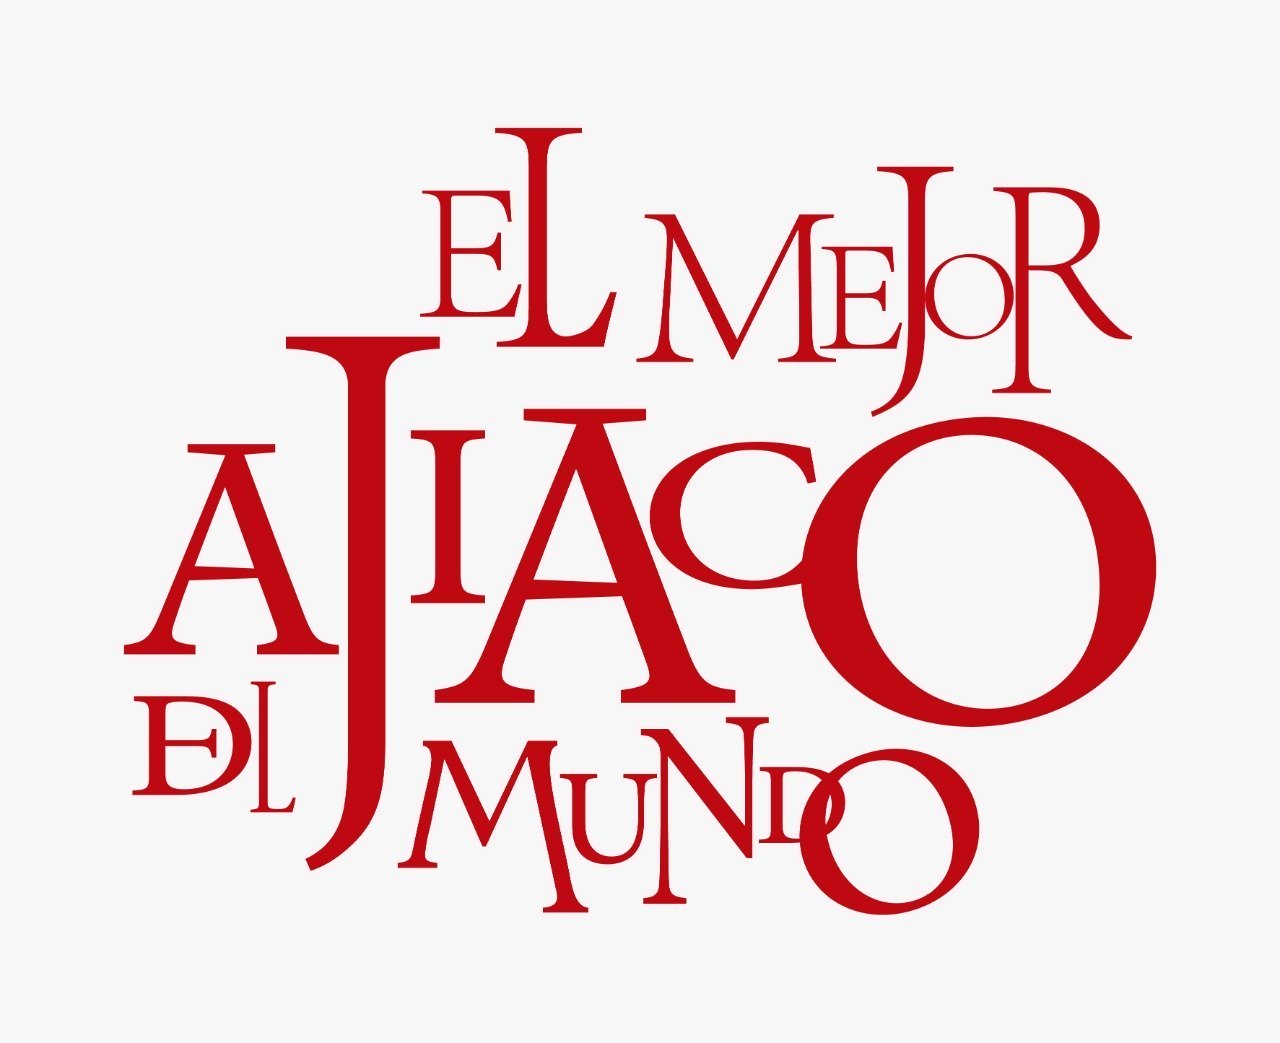 www.elmejorajiacodelmundo.com